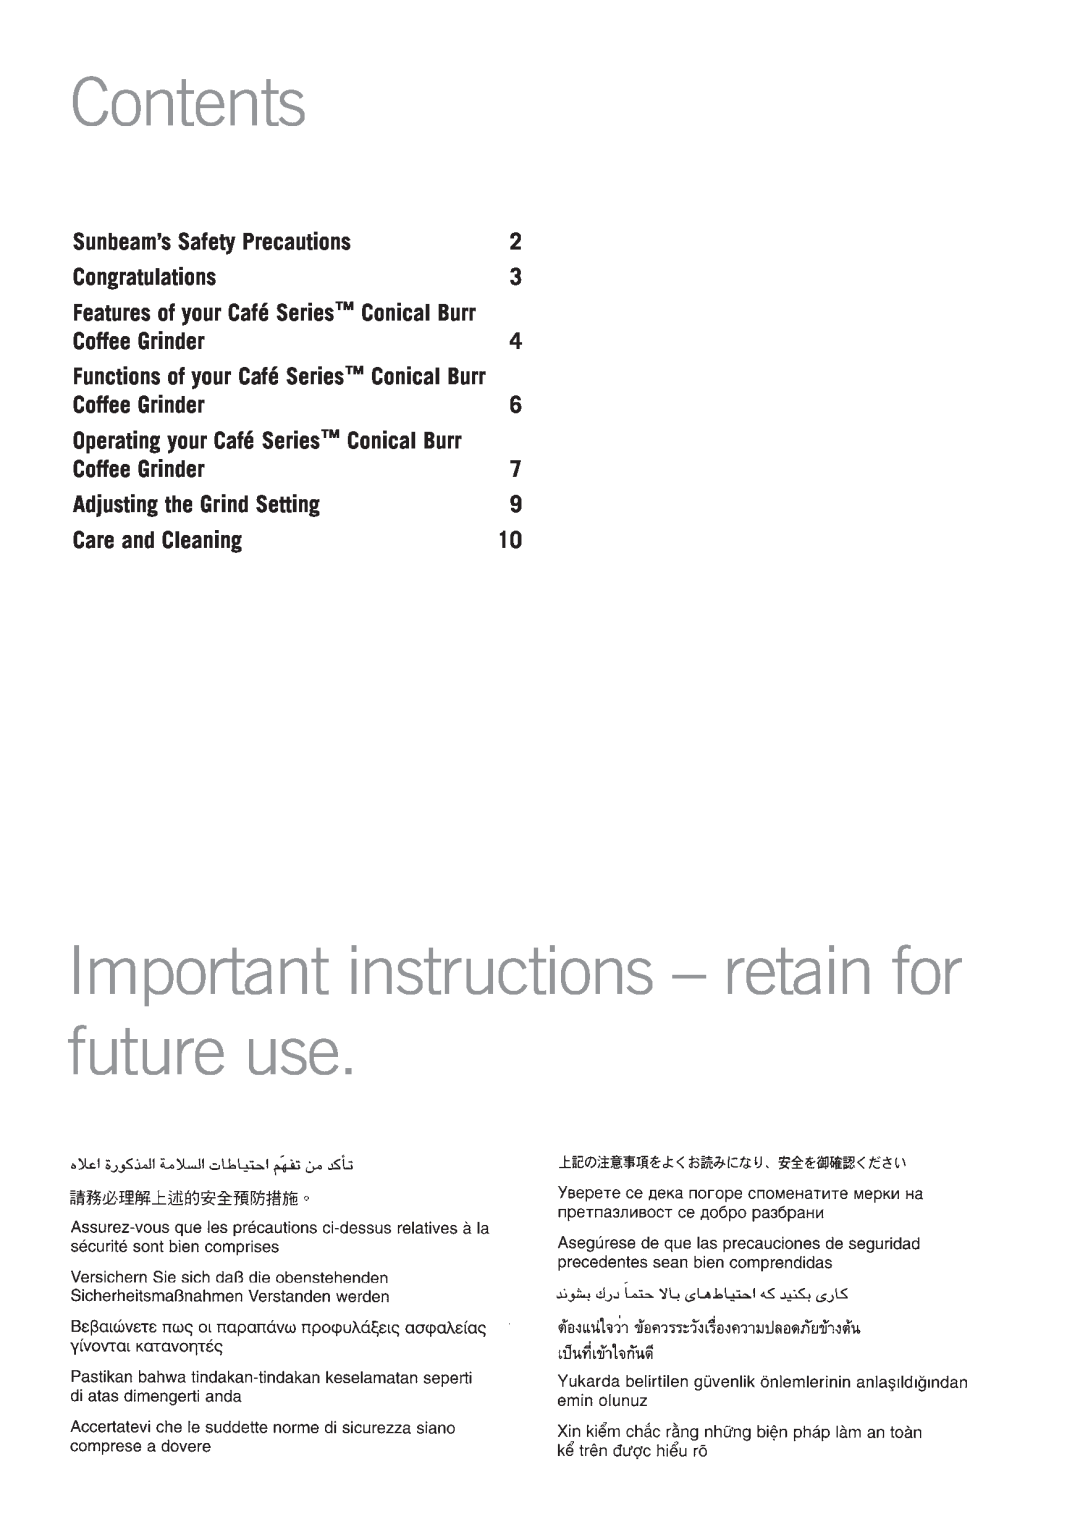 Sunbeam EM0480 Contents, Important instructions - retain for future use, Sunbeam’s Safety Precautions, Congratulations 